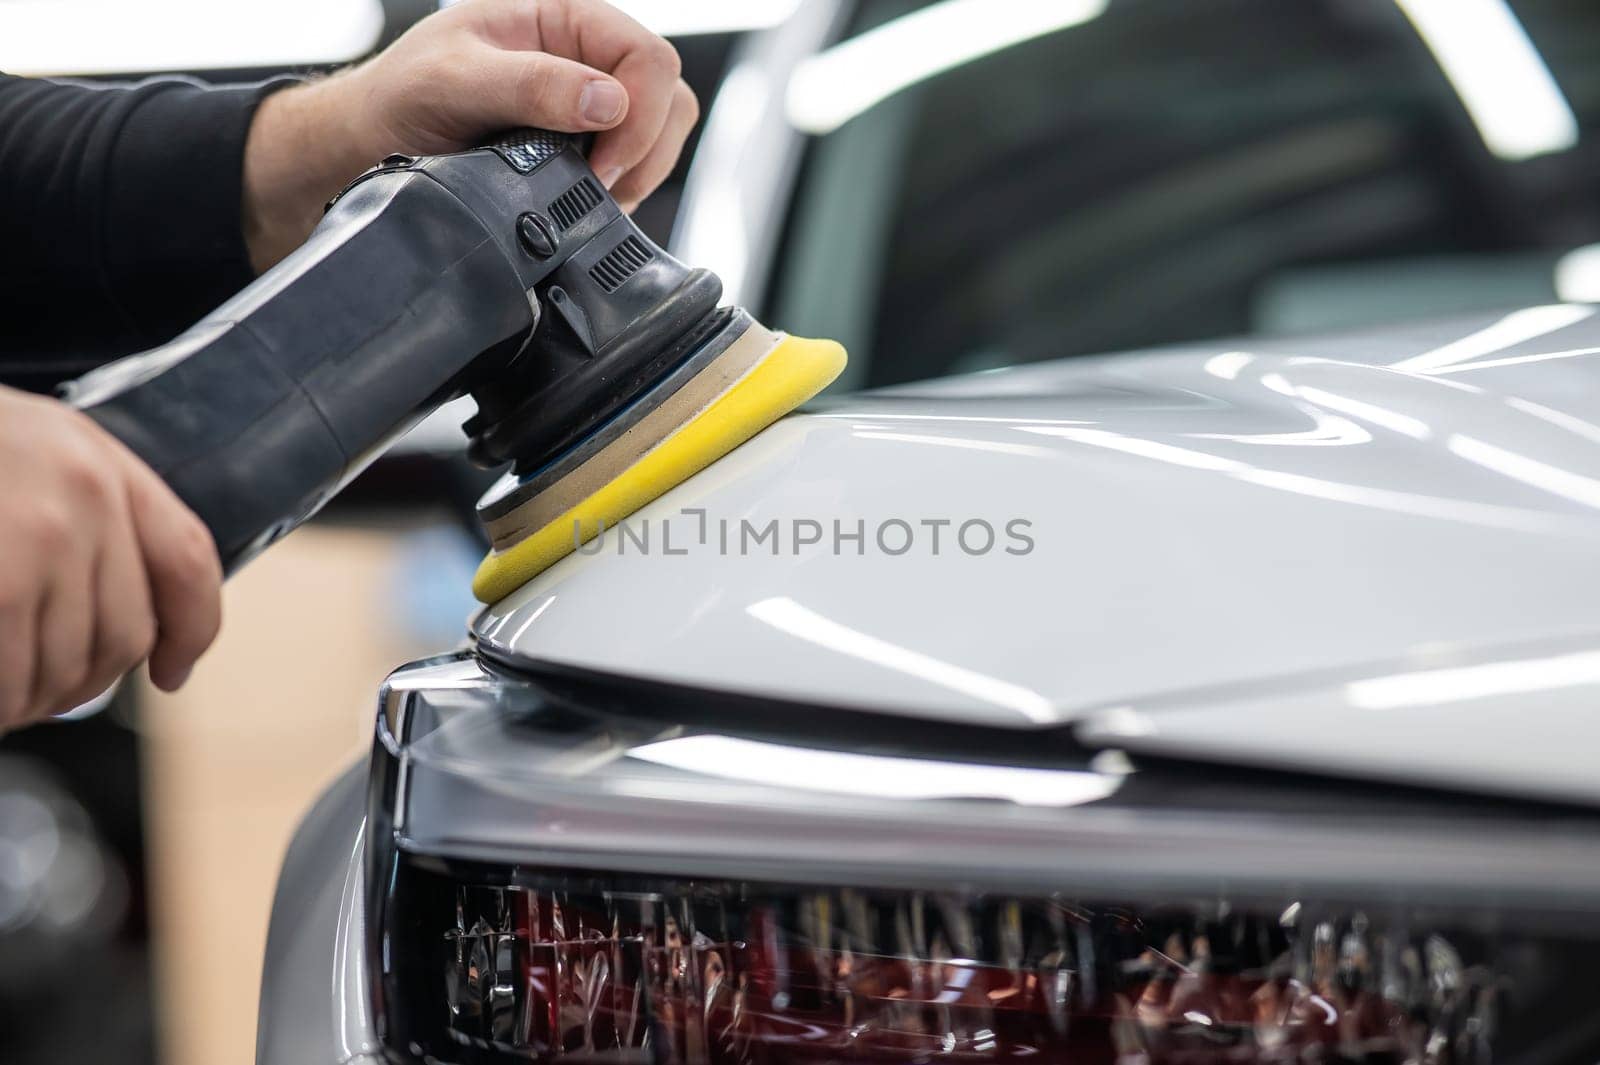 Process of polishing white car hood surface using orbital polishing machine. by mrwed54